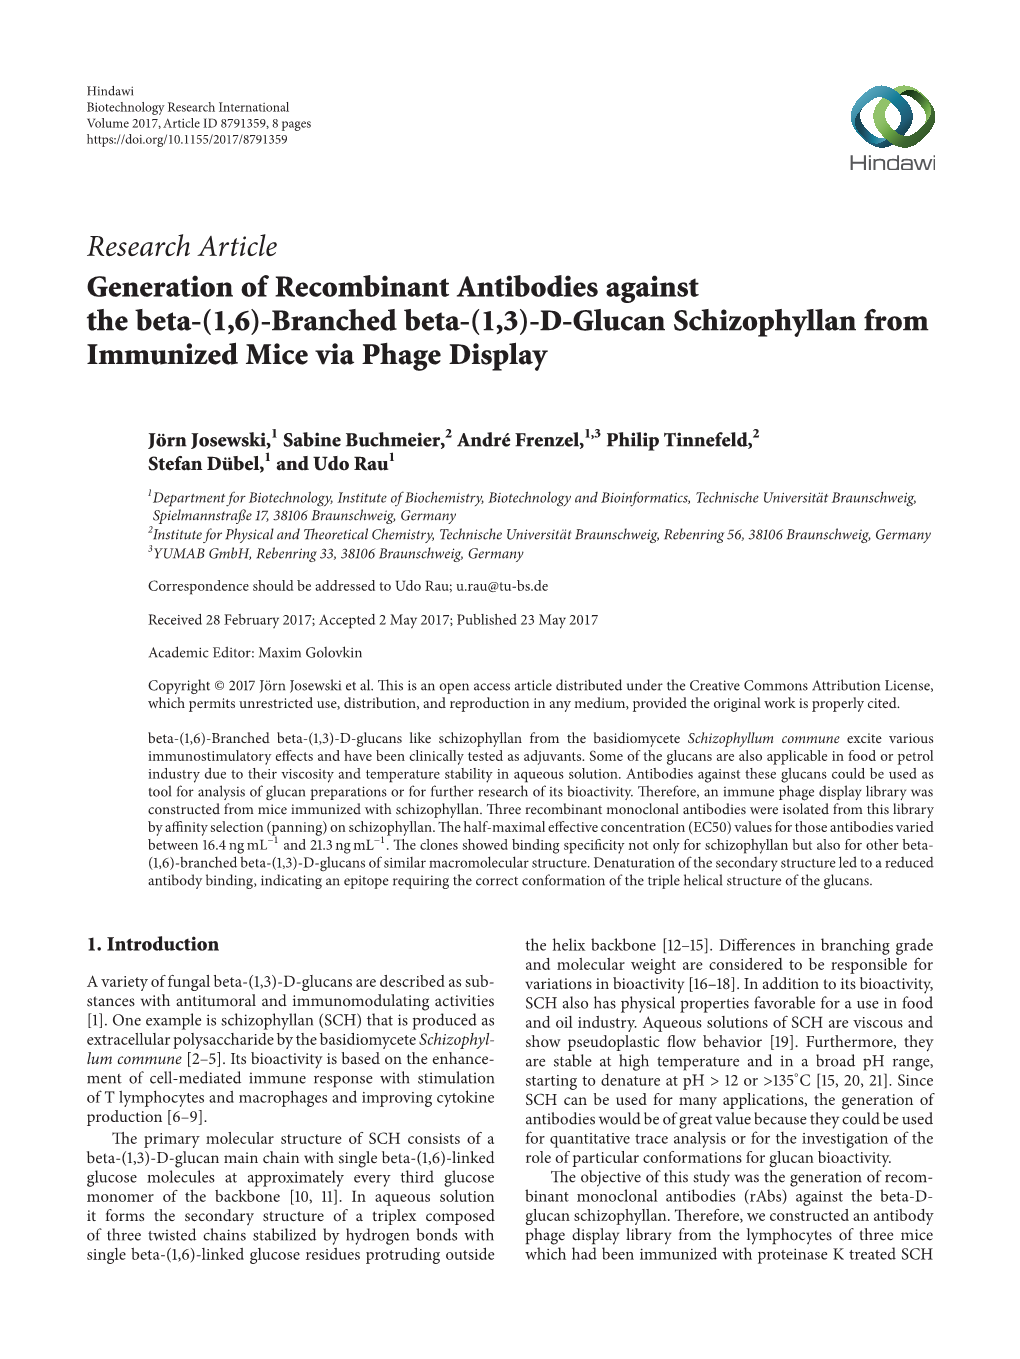 Branched Beta-(1,3)-D-Glucan Schizophyllan from Immunized Mice Via Phage Display